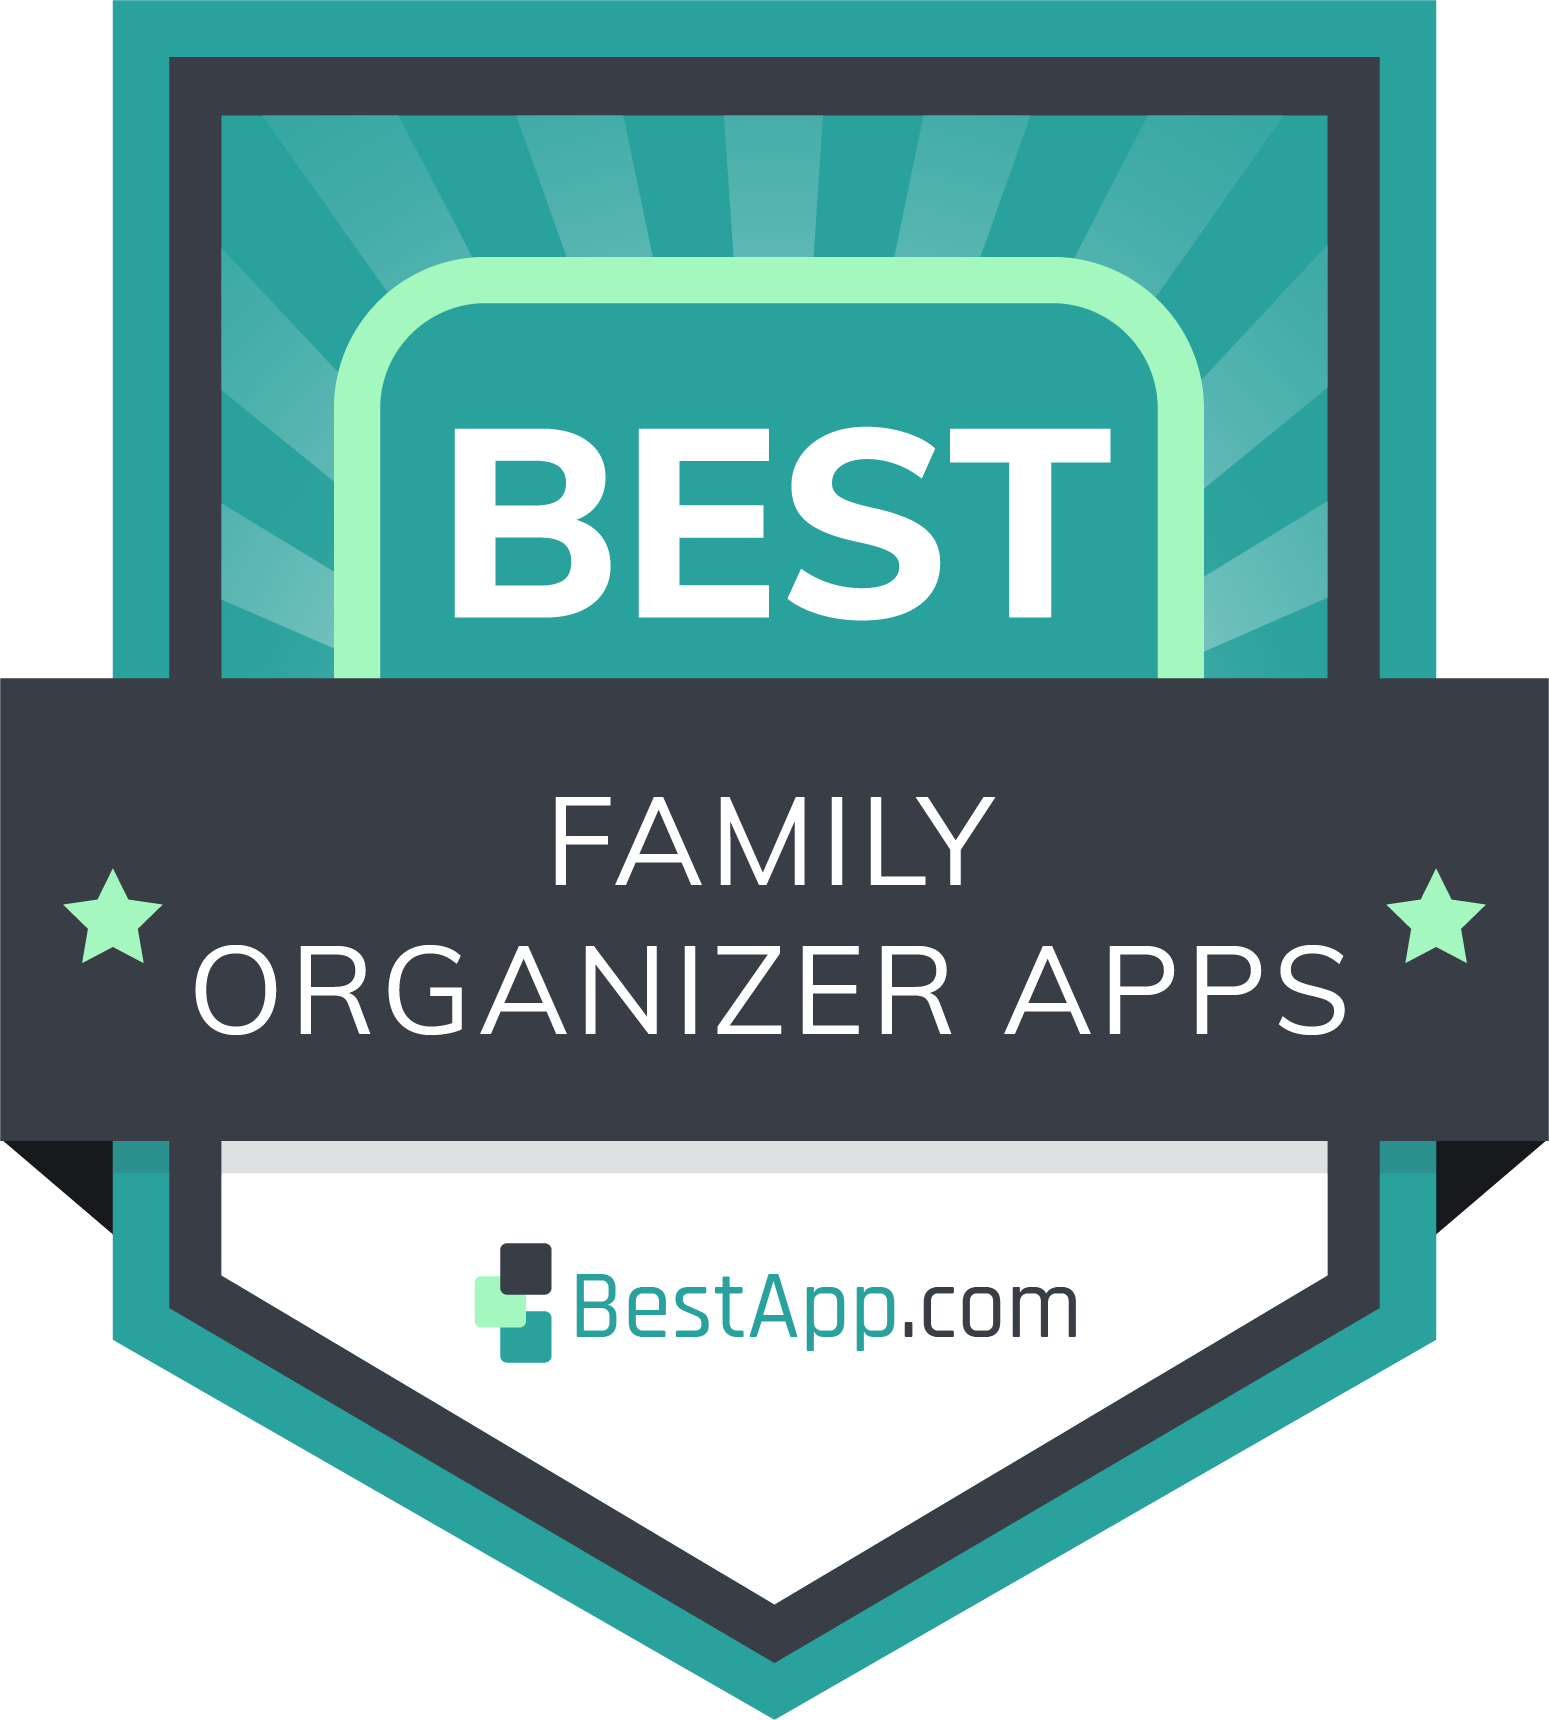 Best Family Organizer Apps Badge